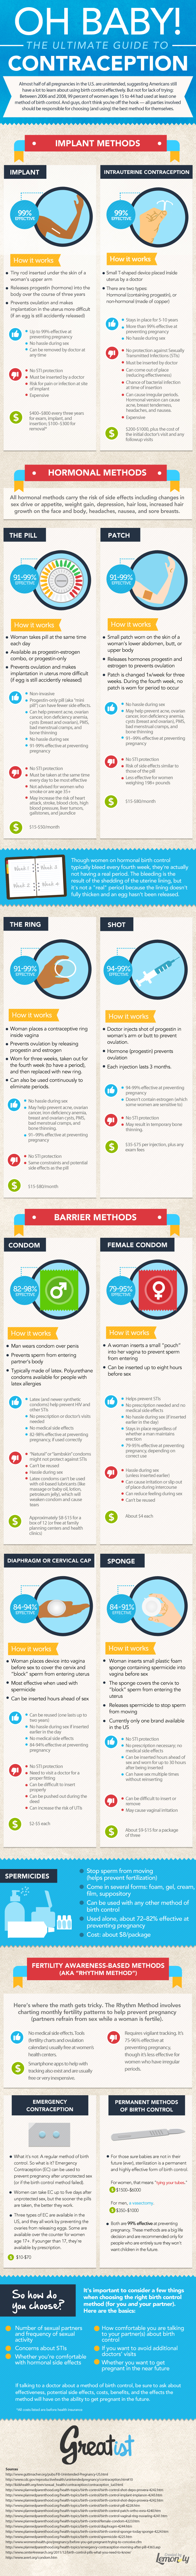 Guide to contraception